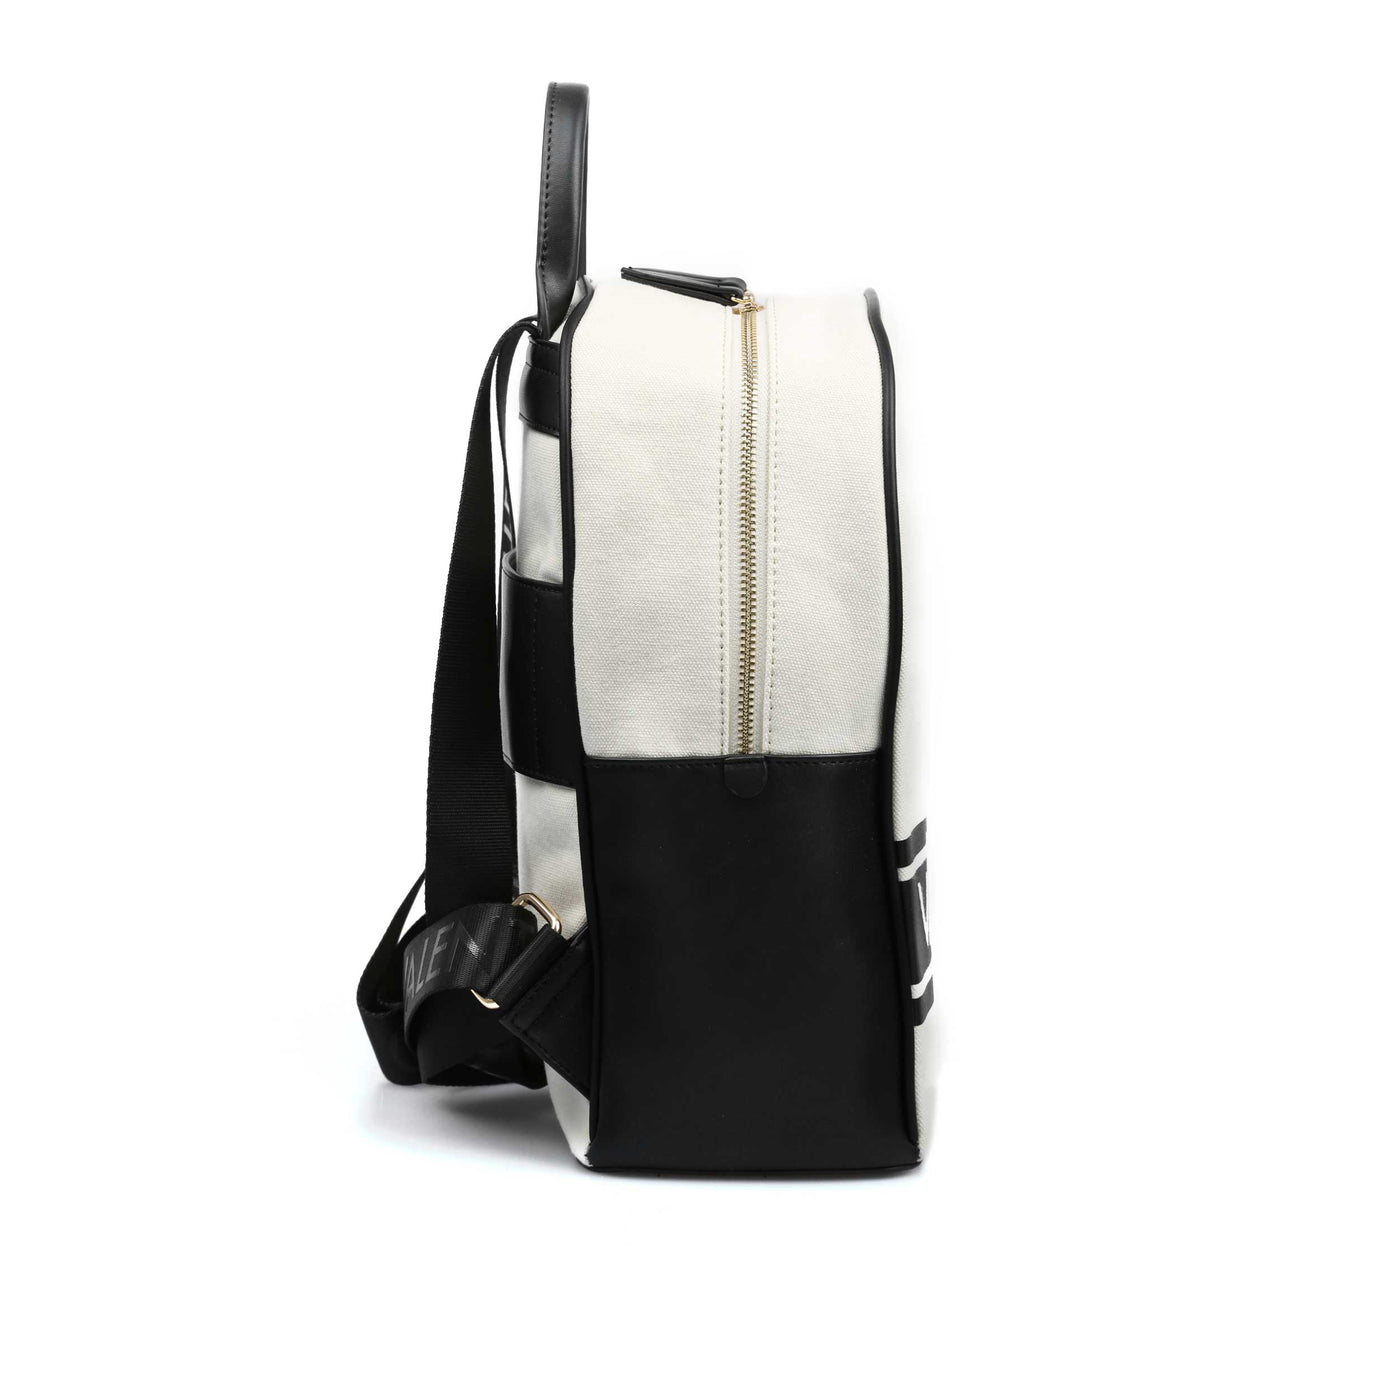 Valentino Bags Vesper Back Pack in Natural & Black